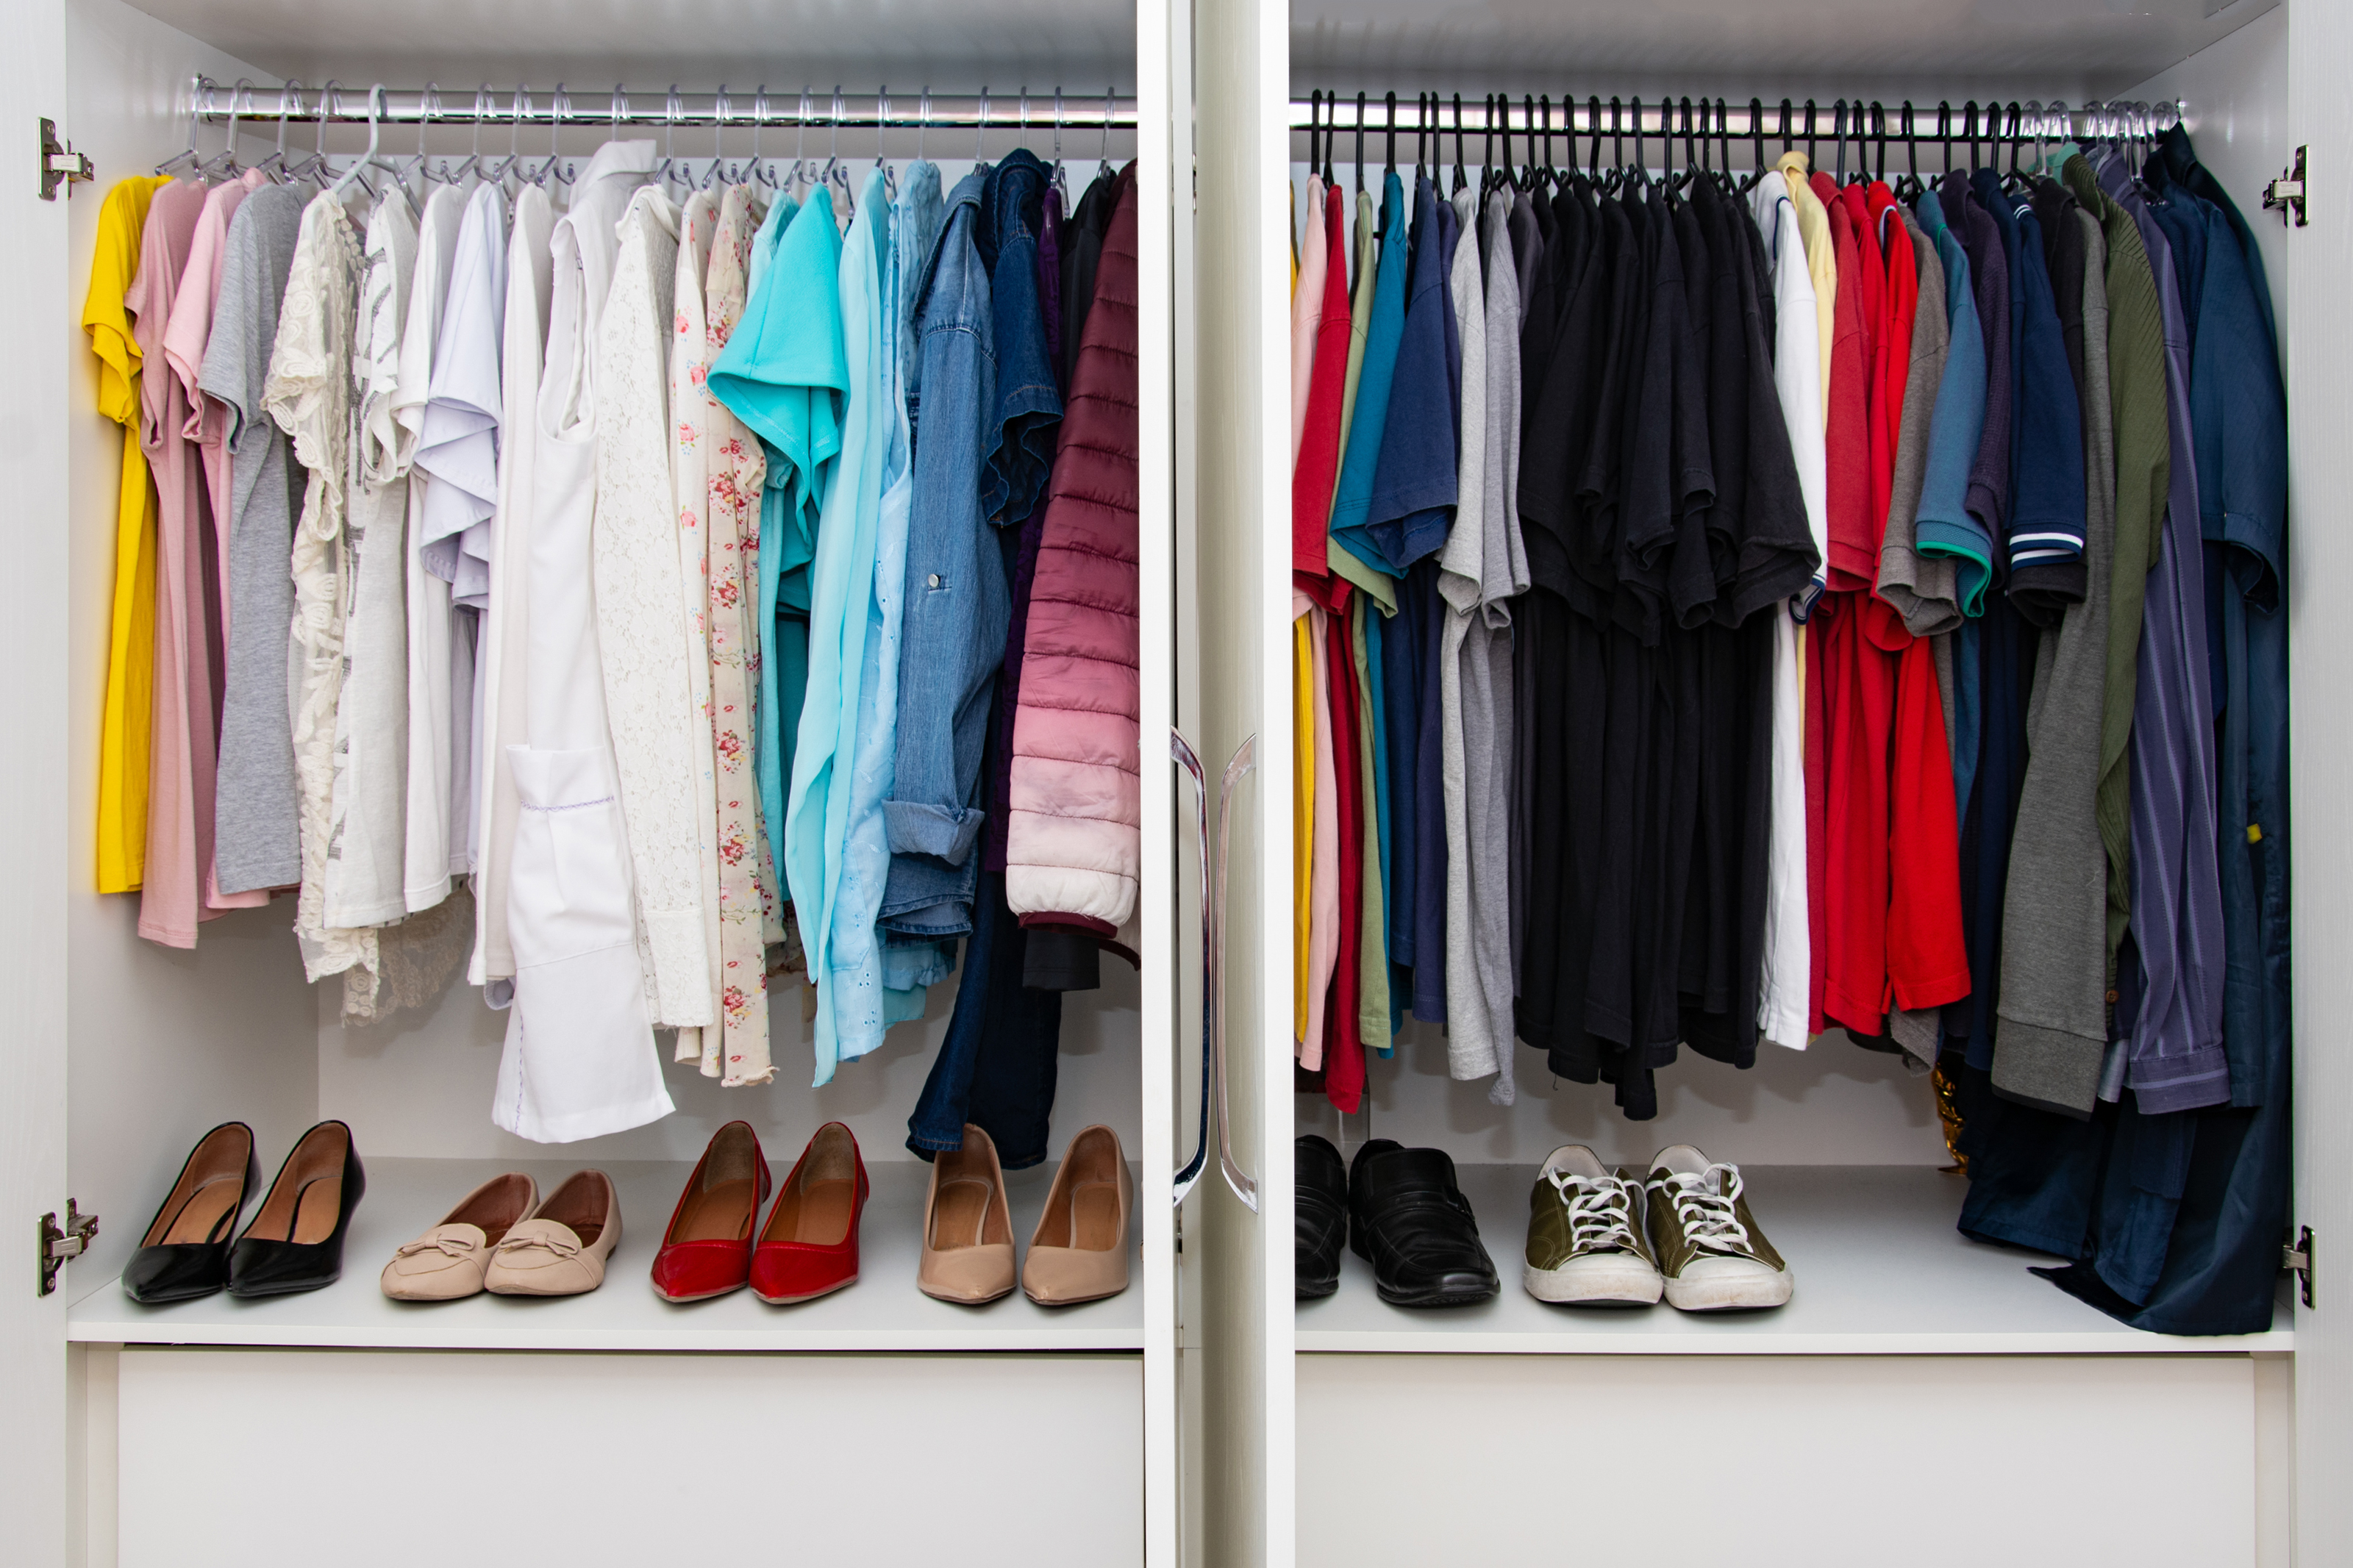 https://www.houselogic.com/wp-content/uploads/2022/06/closet-organizer-ideas-men-women-colorful-wardrobe.jpg